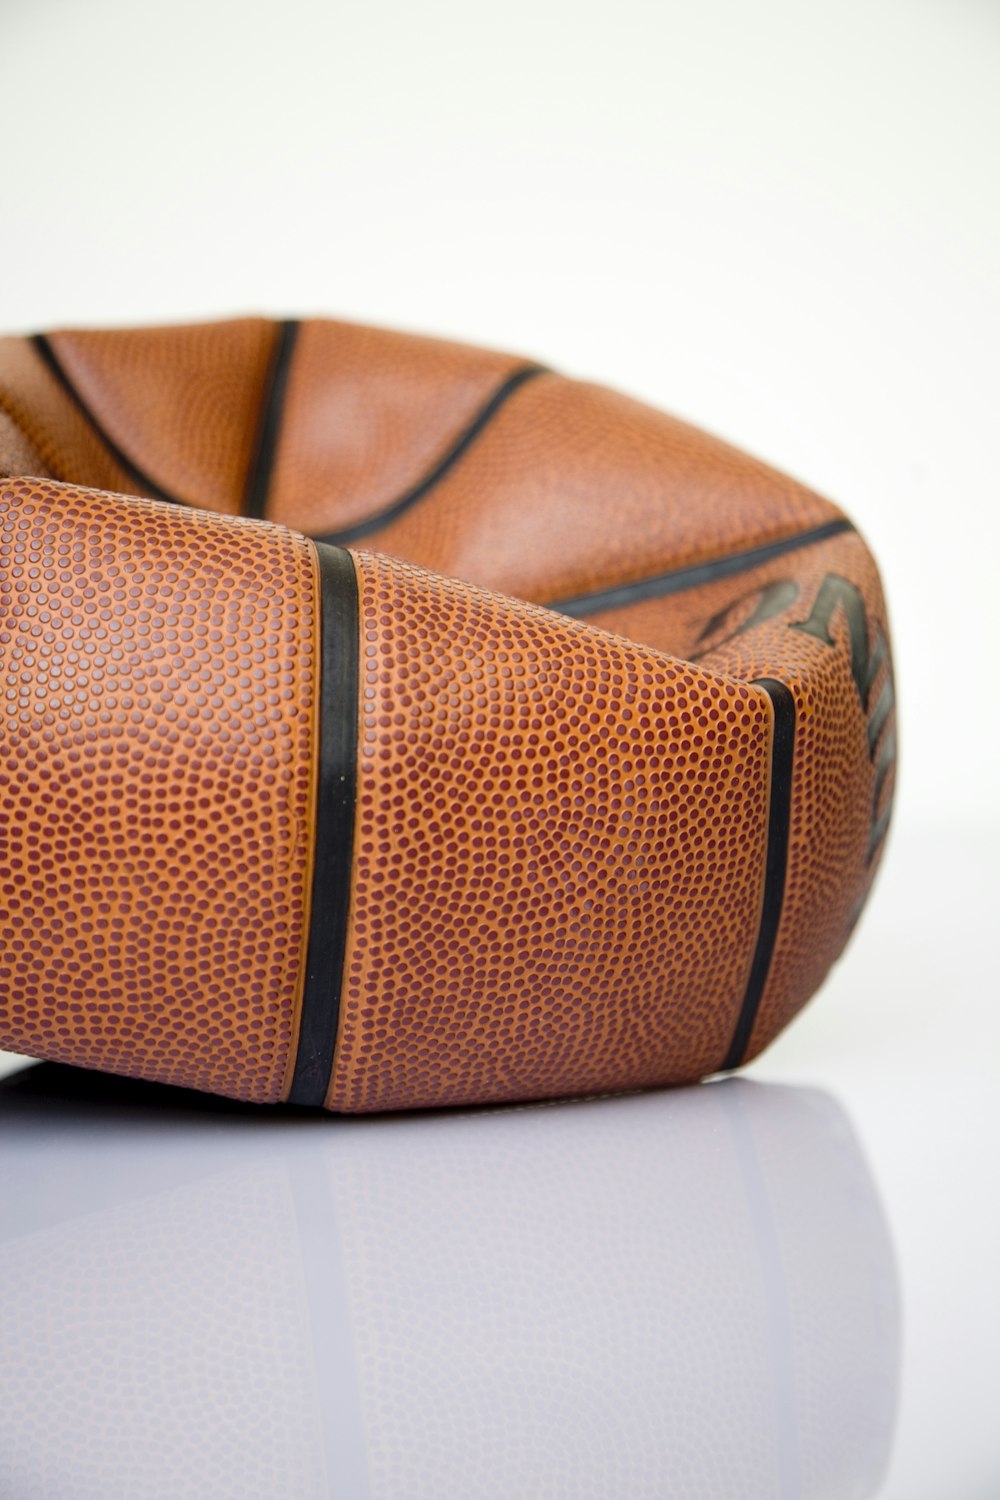 brown basketball ball on white surface